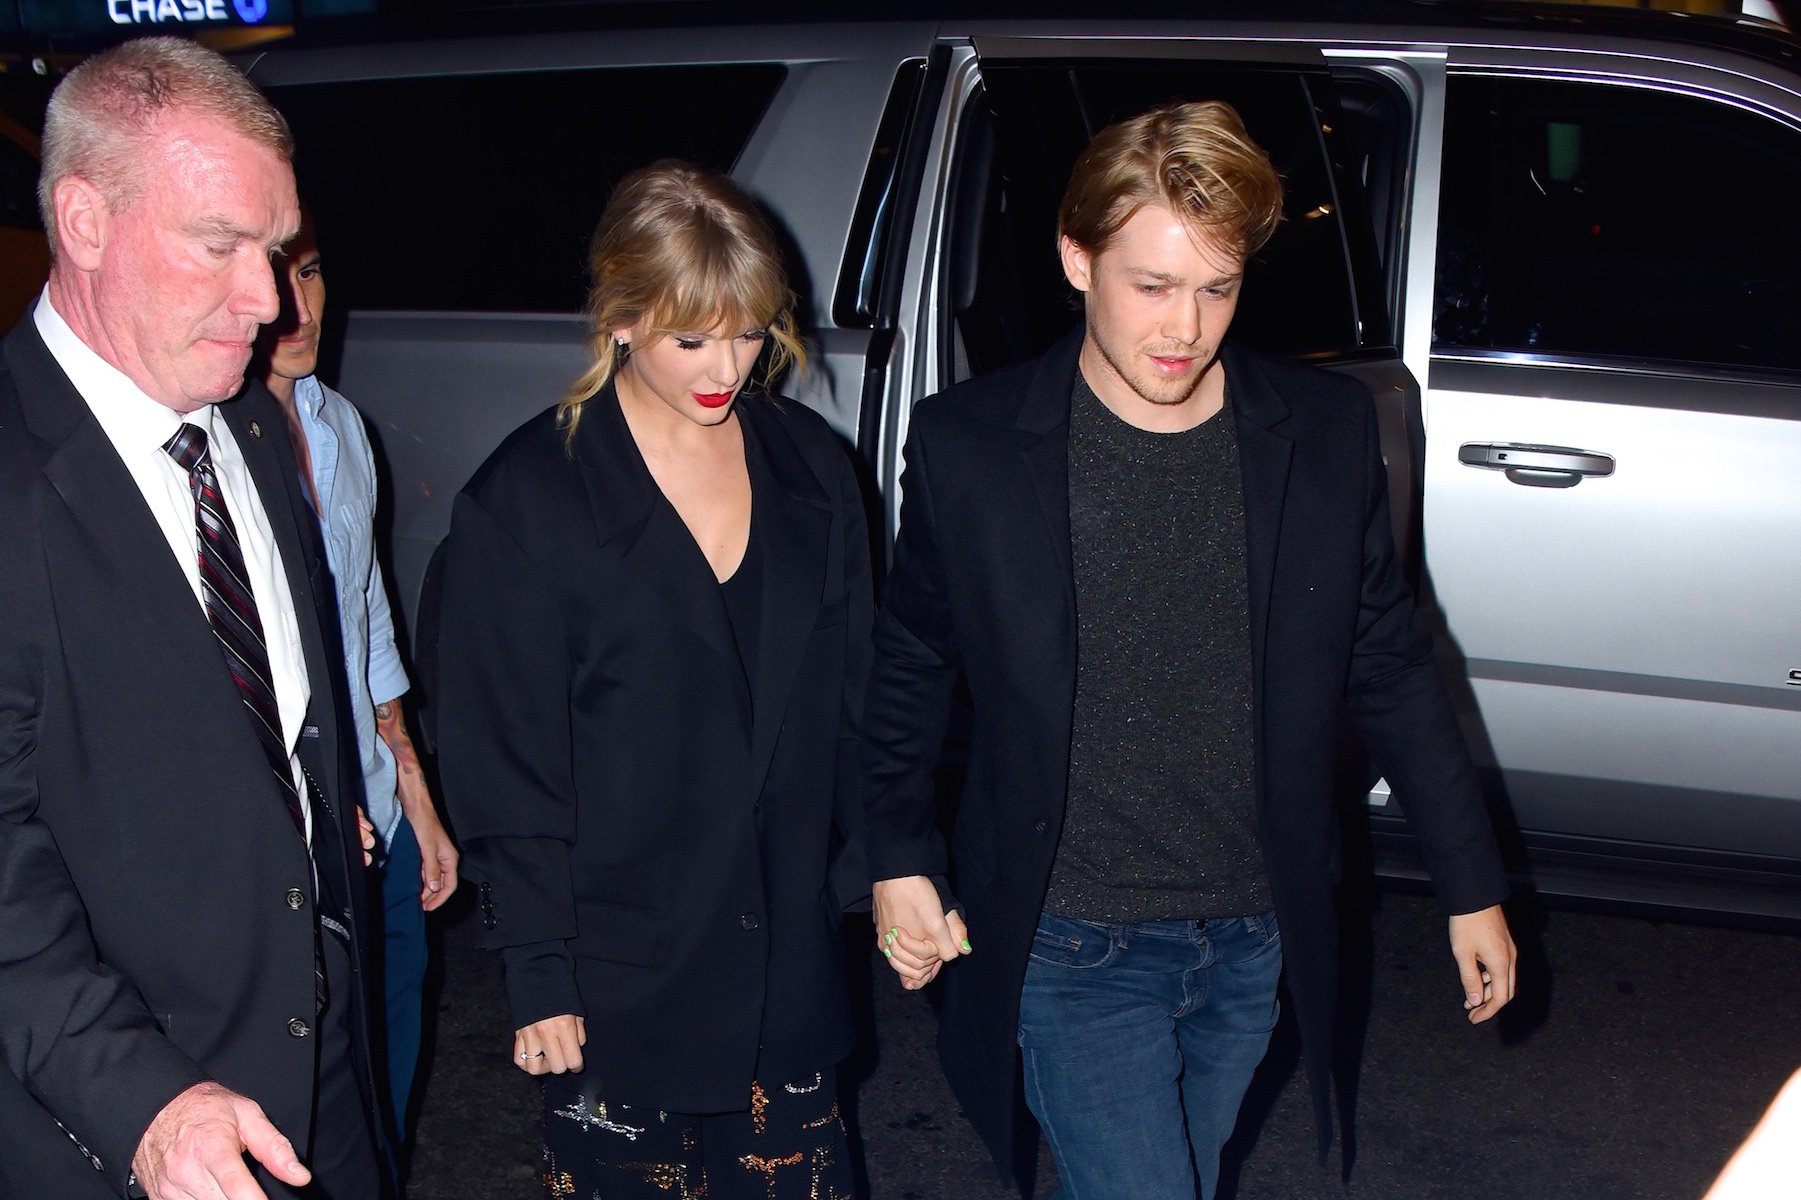 Taylor Swift and Joe Alwyn walking hand in hand away from a camera